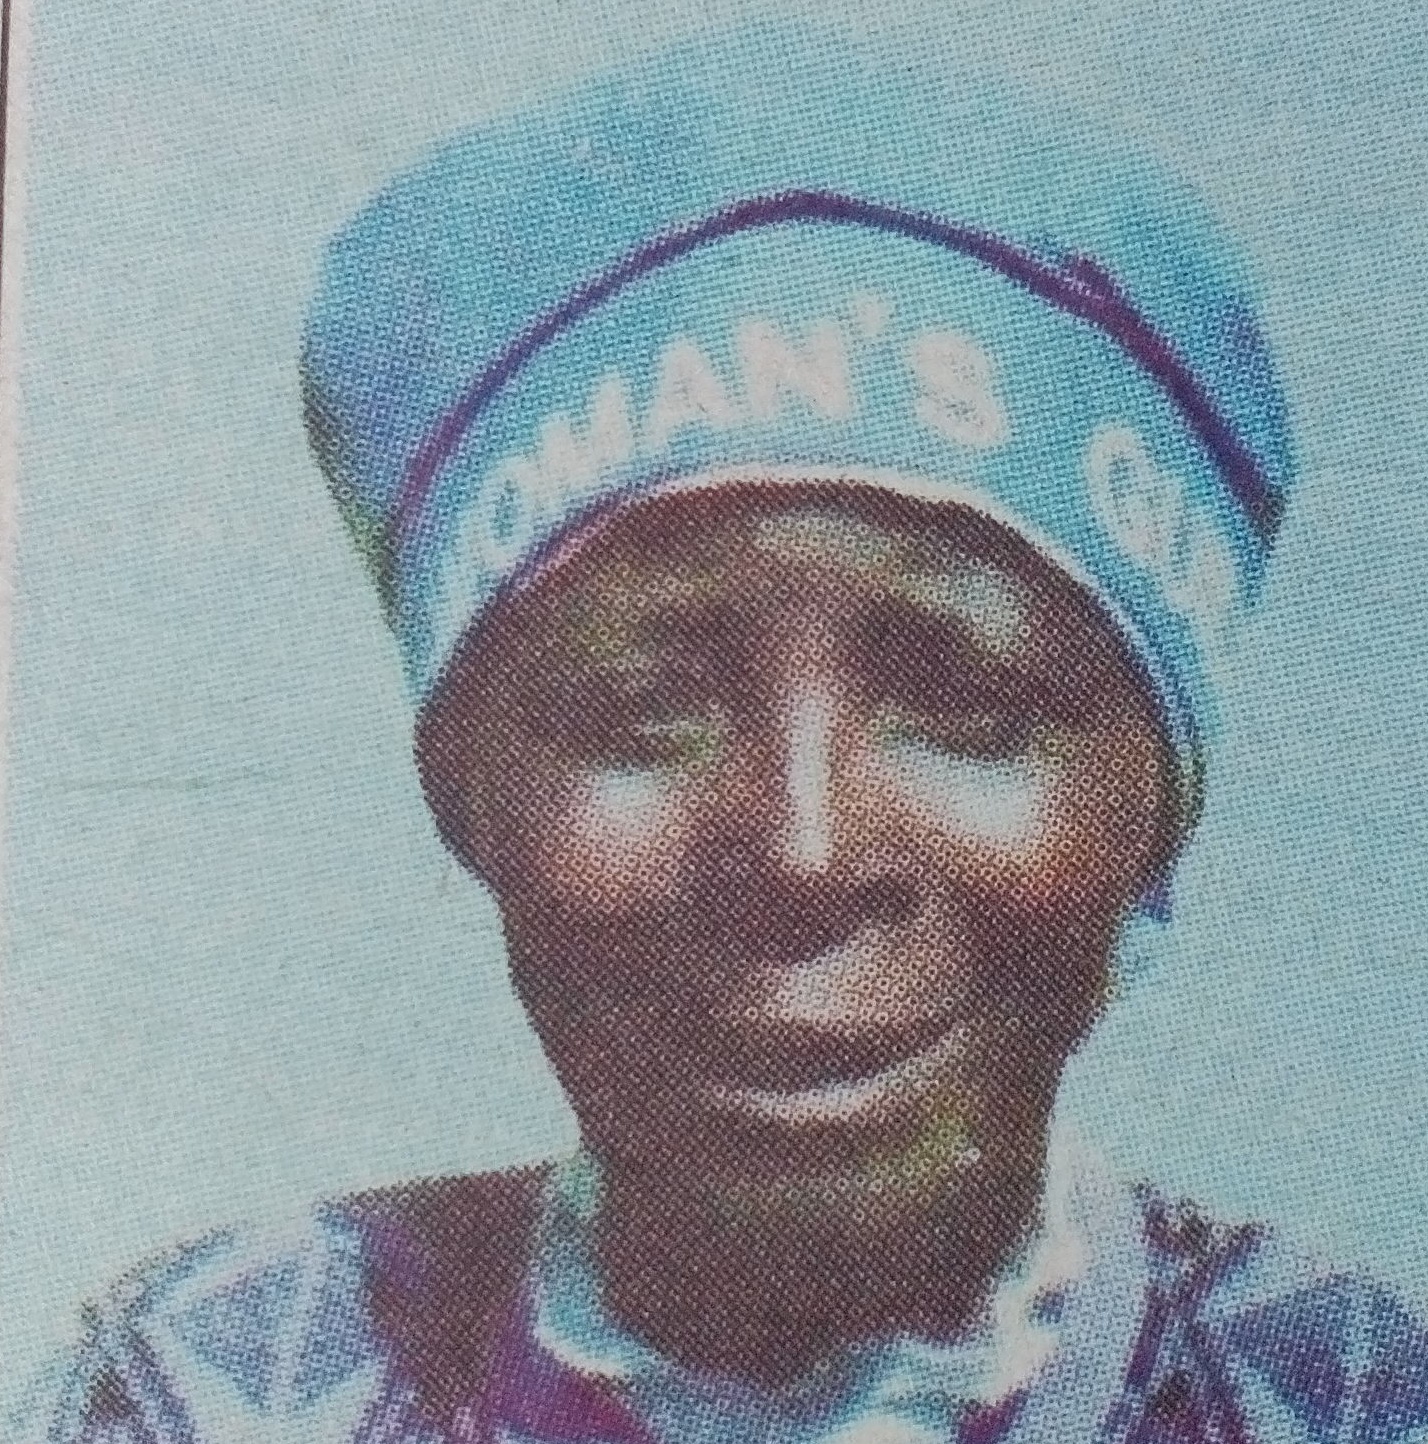 Obituary Image of Hannah Wanjiru Macharia